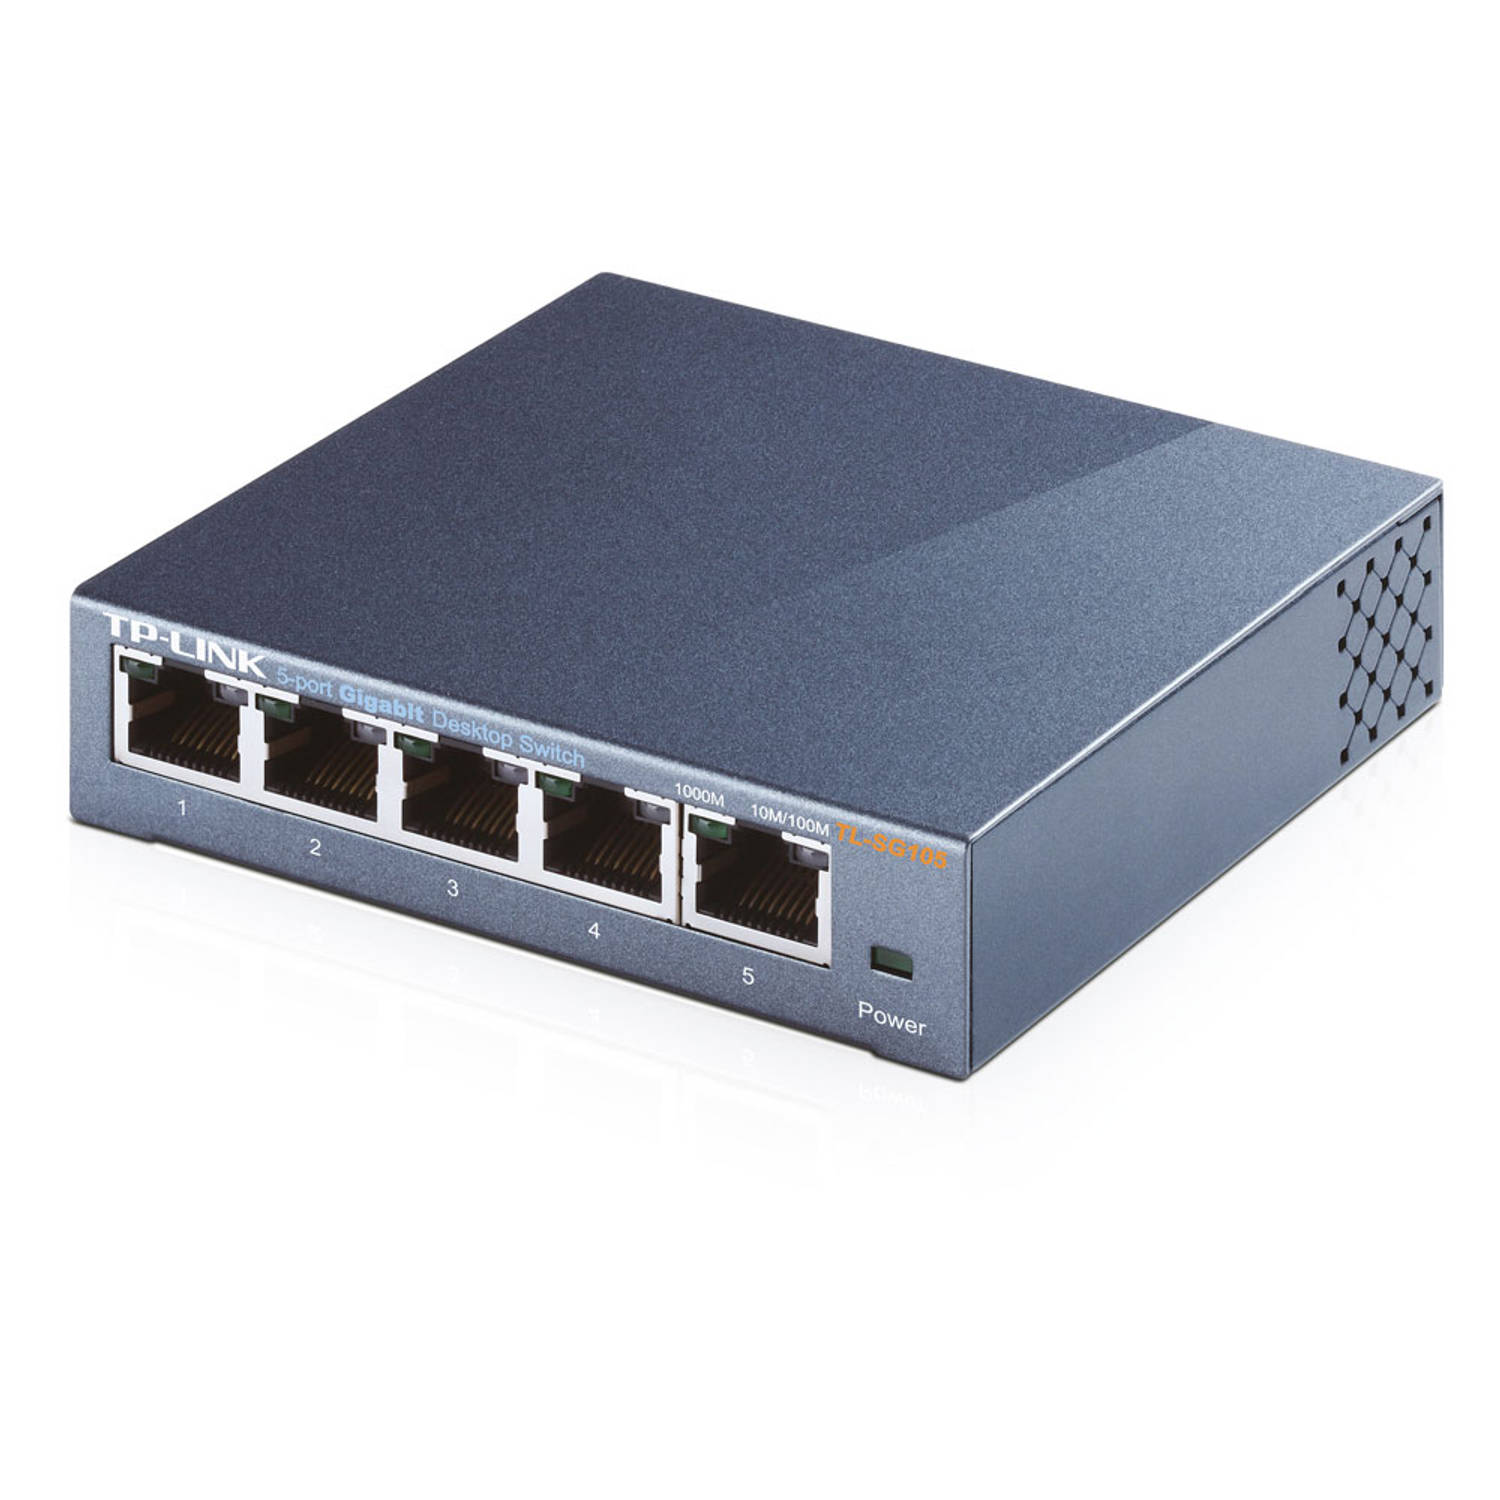 Bedachtzaam Bijdrager Extreem TP-Link netwerk switch TL-SG105 | Blokker